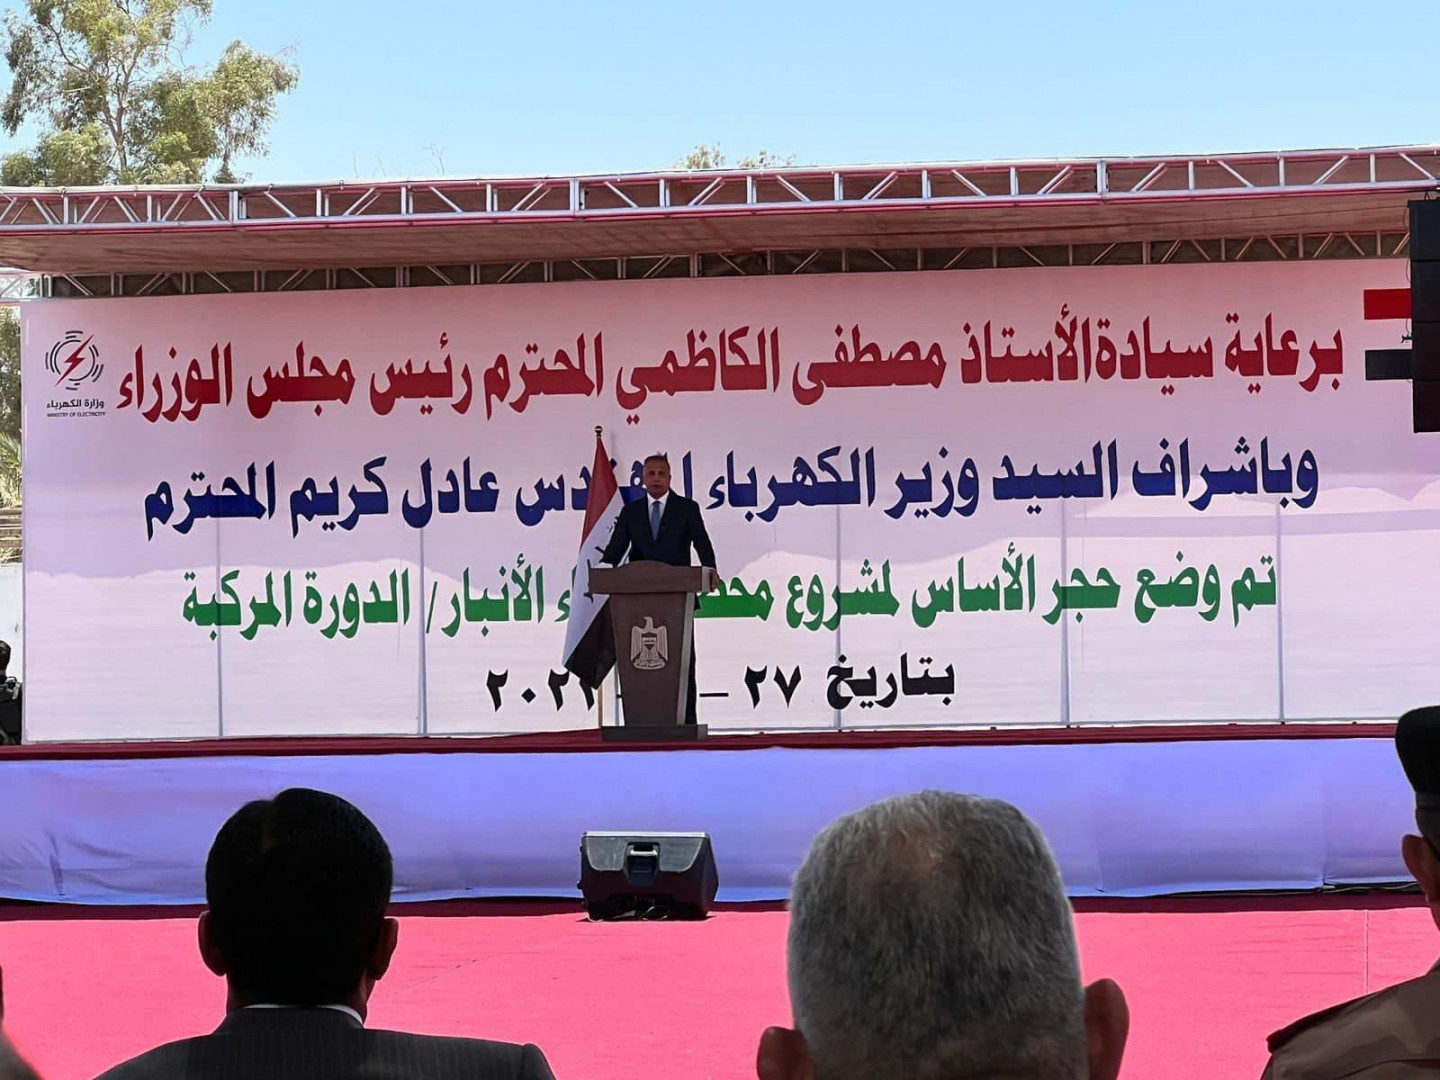 Al-Kadhimi says new power plant will improve service in al-Anbar